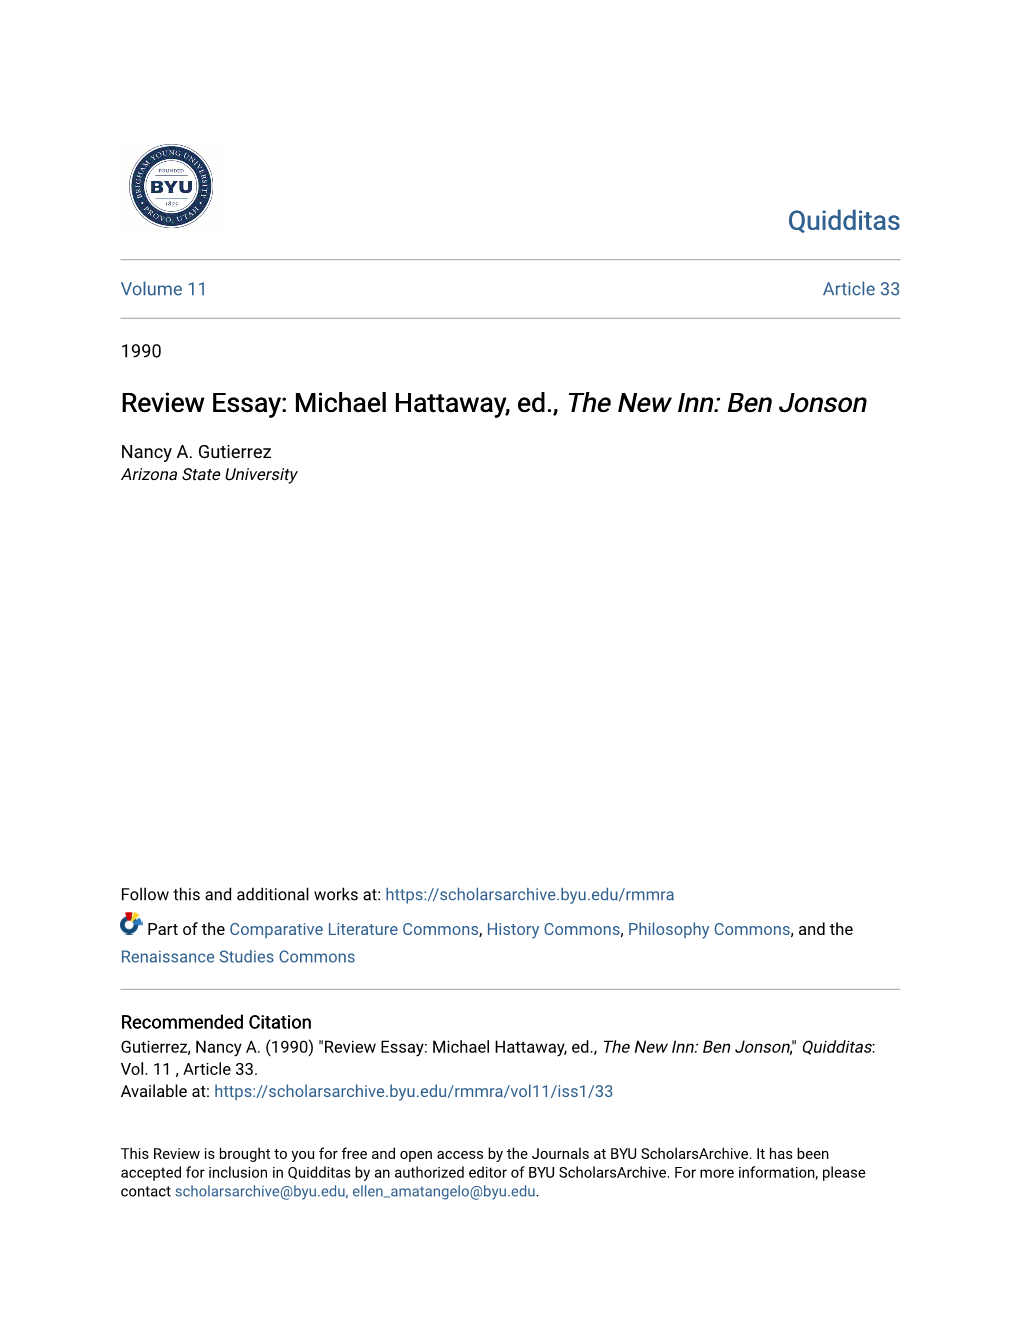 Review Essay: Michael Hattaway, Ed., the New Inn: Ben Jonson